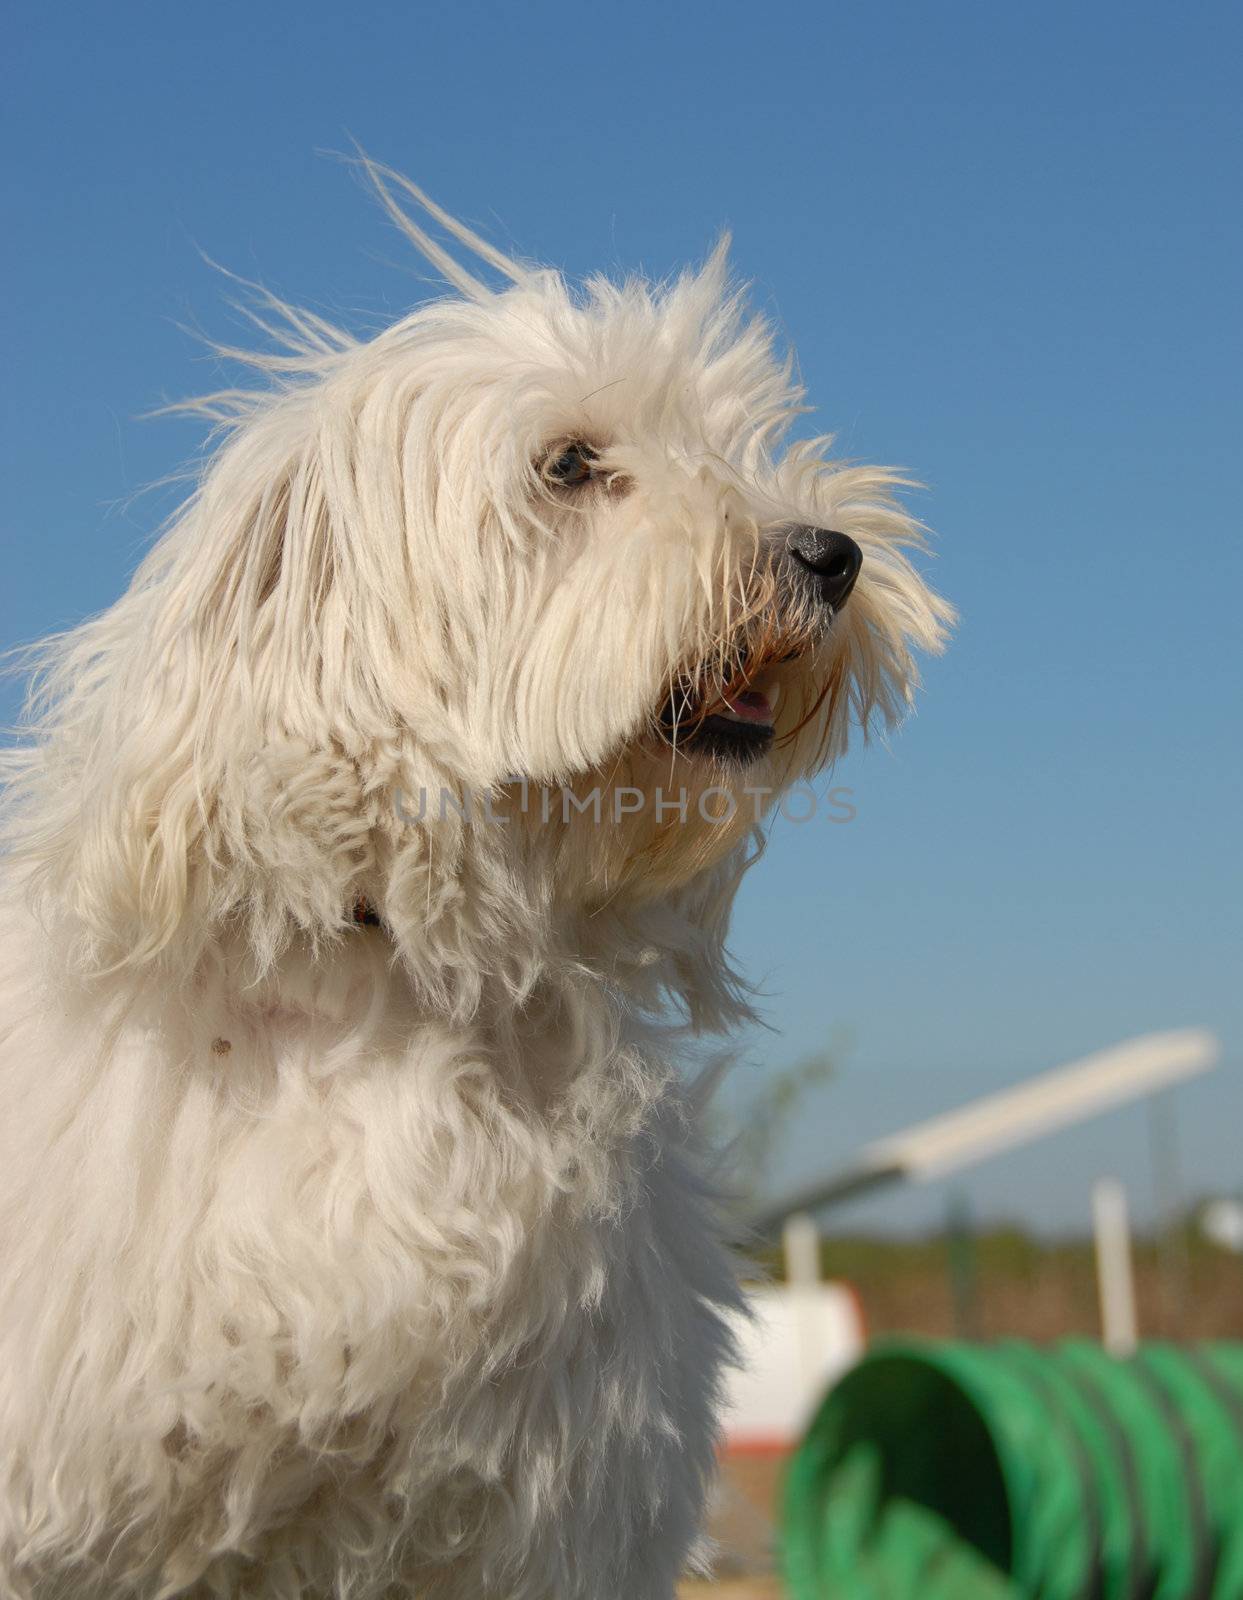 portrait of a beautiful little white dog: tulear coton

